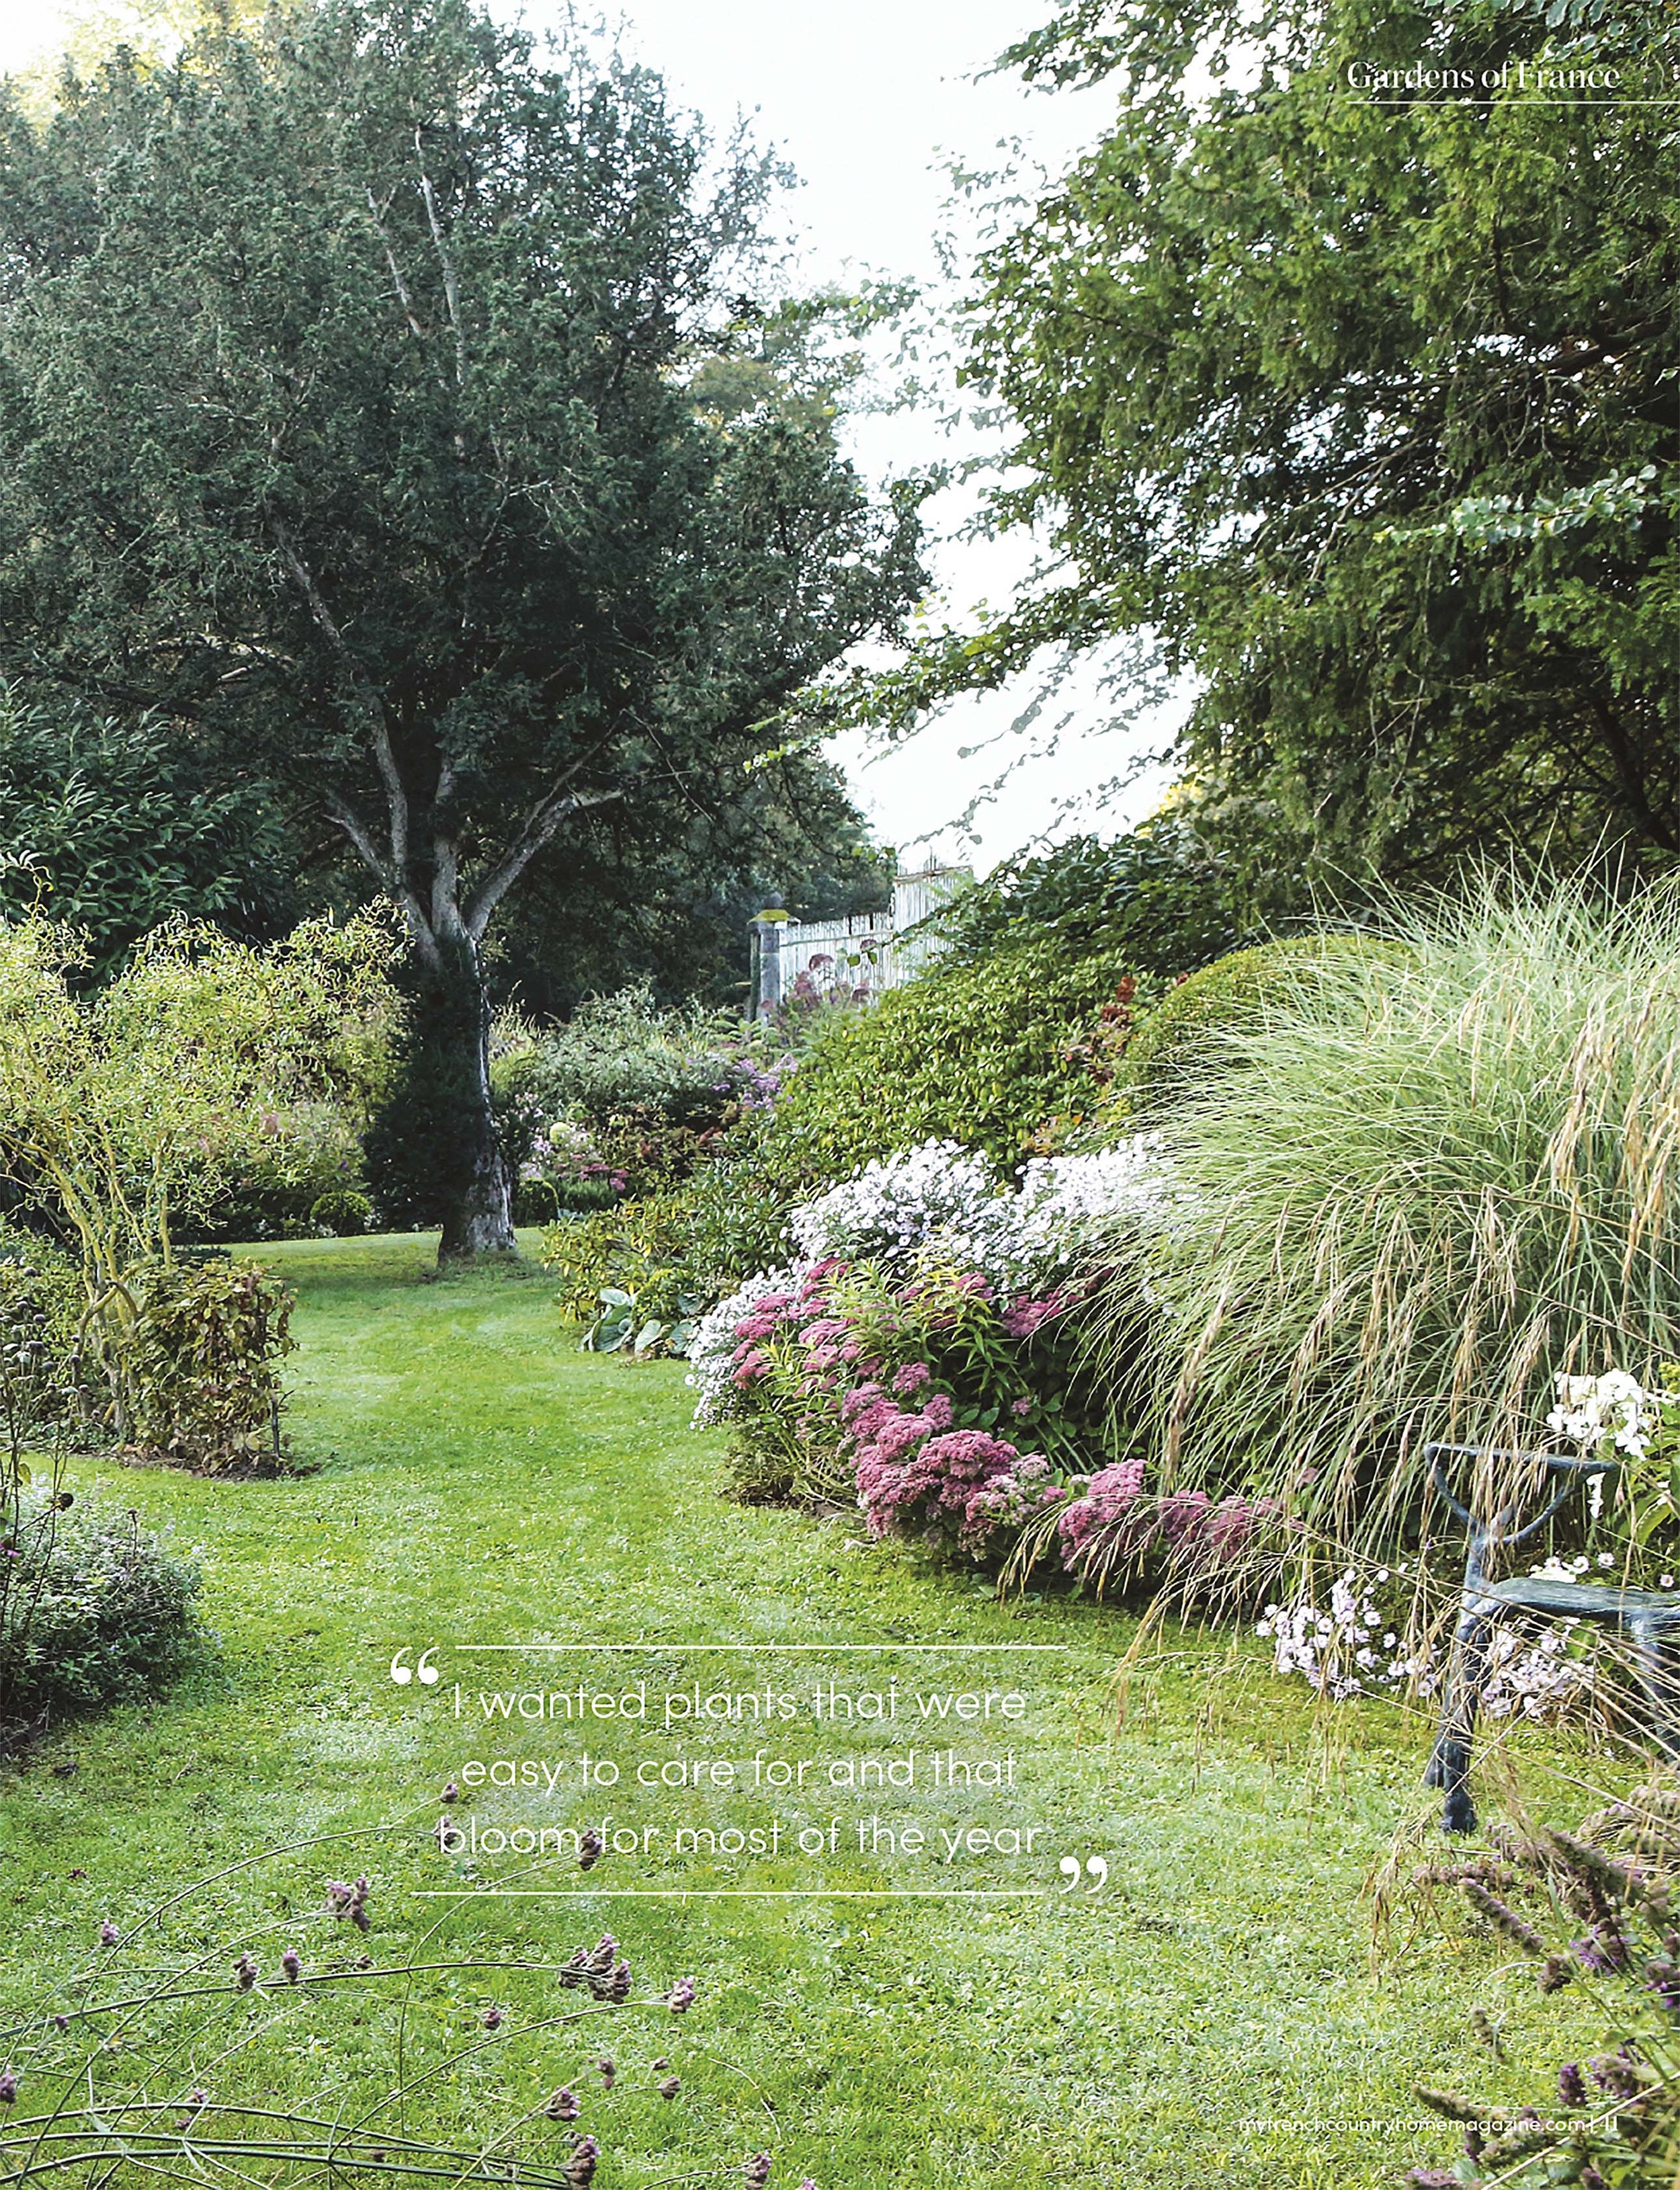 14-Gardens of France-Seine et Marne-7 ok web.jpg